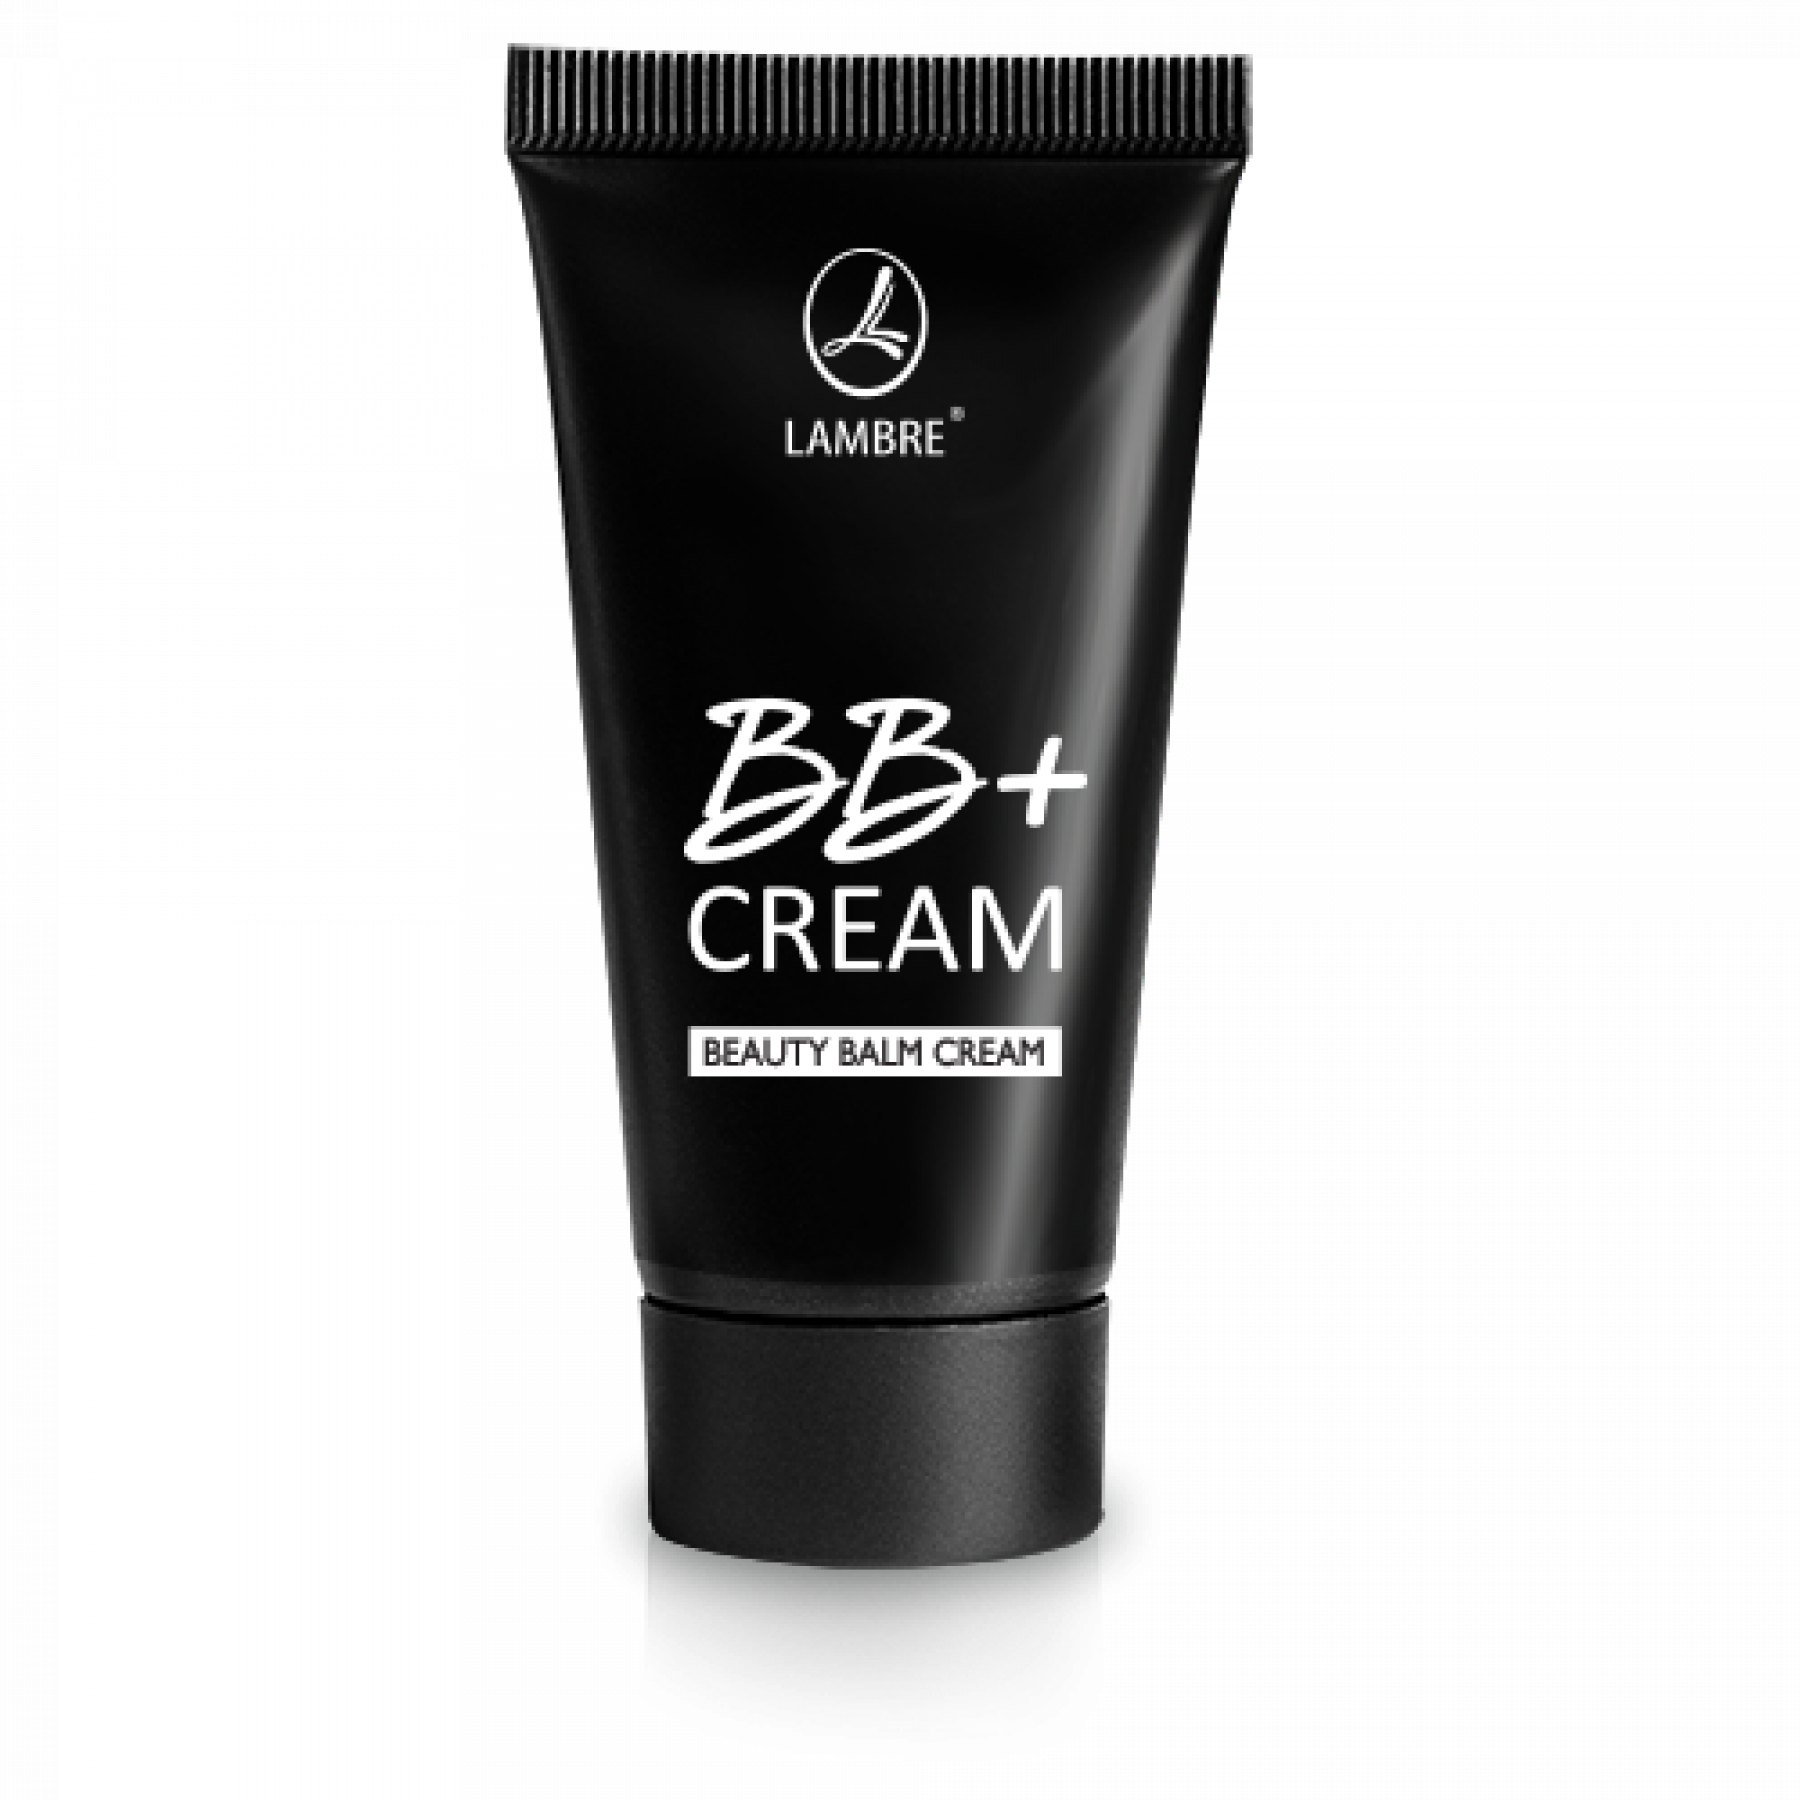 Bb+ cream 30ml Medium No2